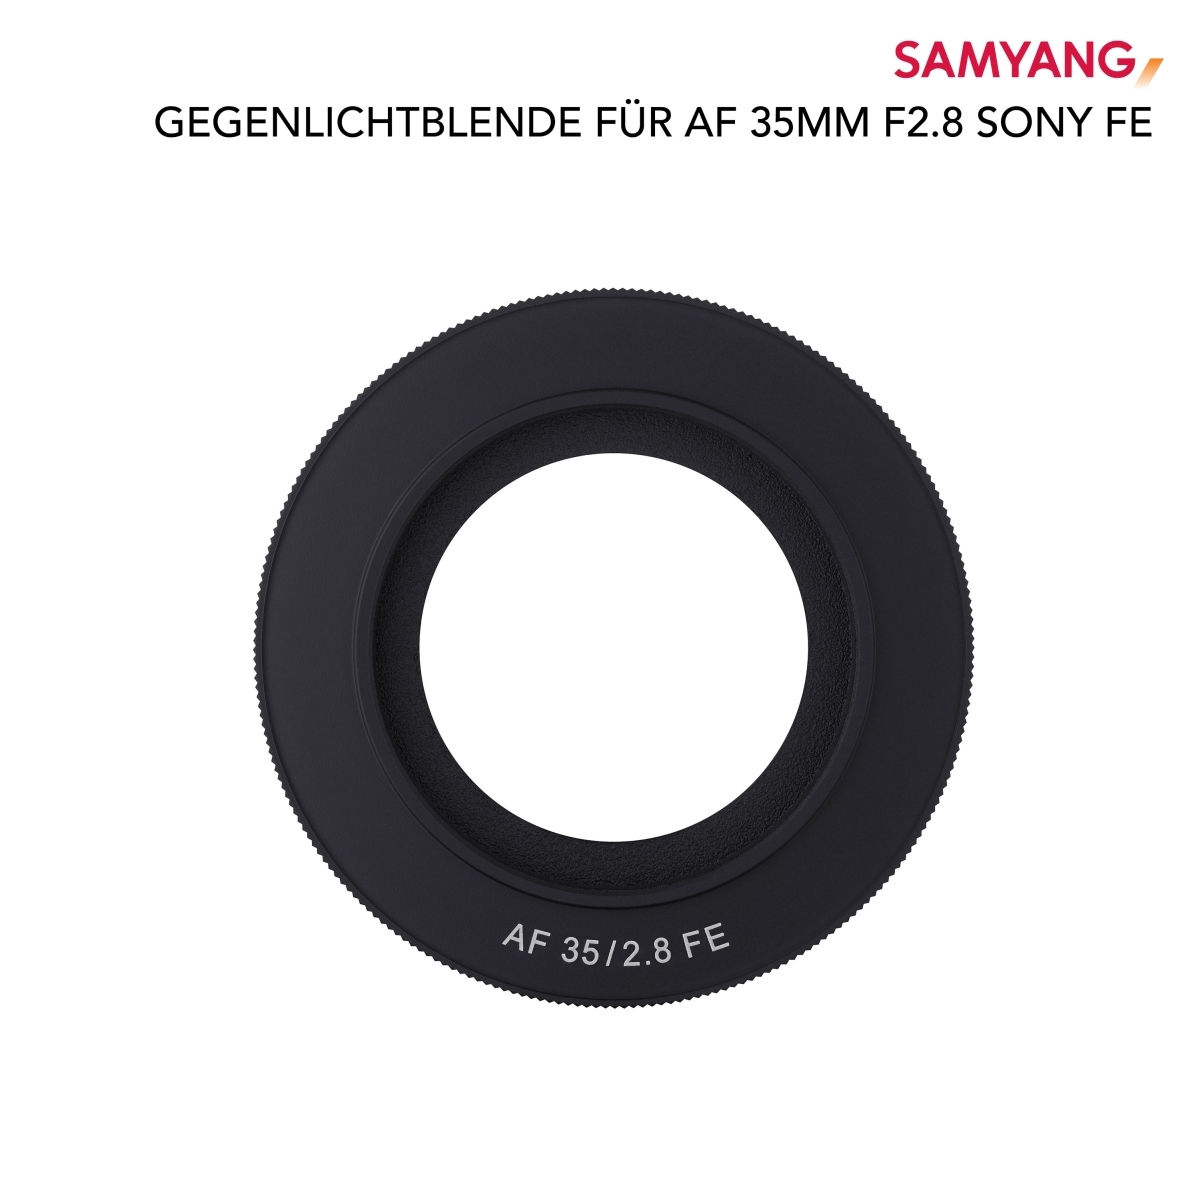 Samyang zonnekap voor AF 35mm F2.8 Sony FE